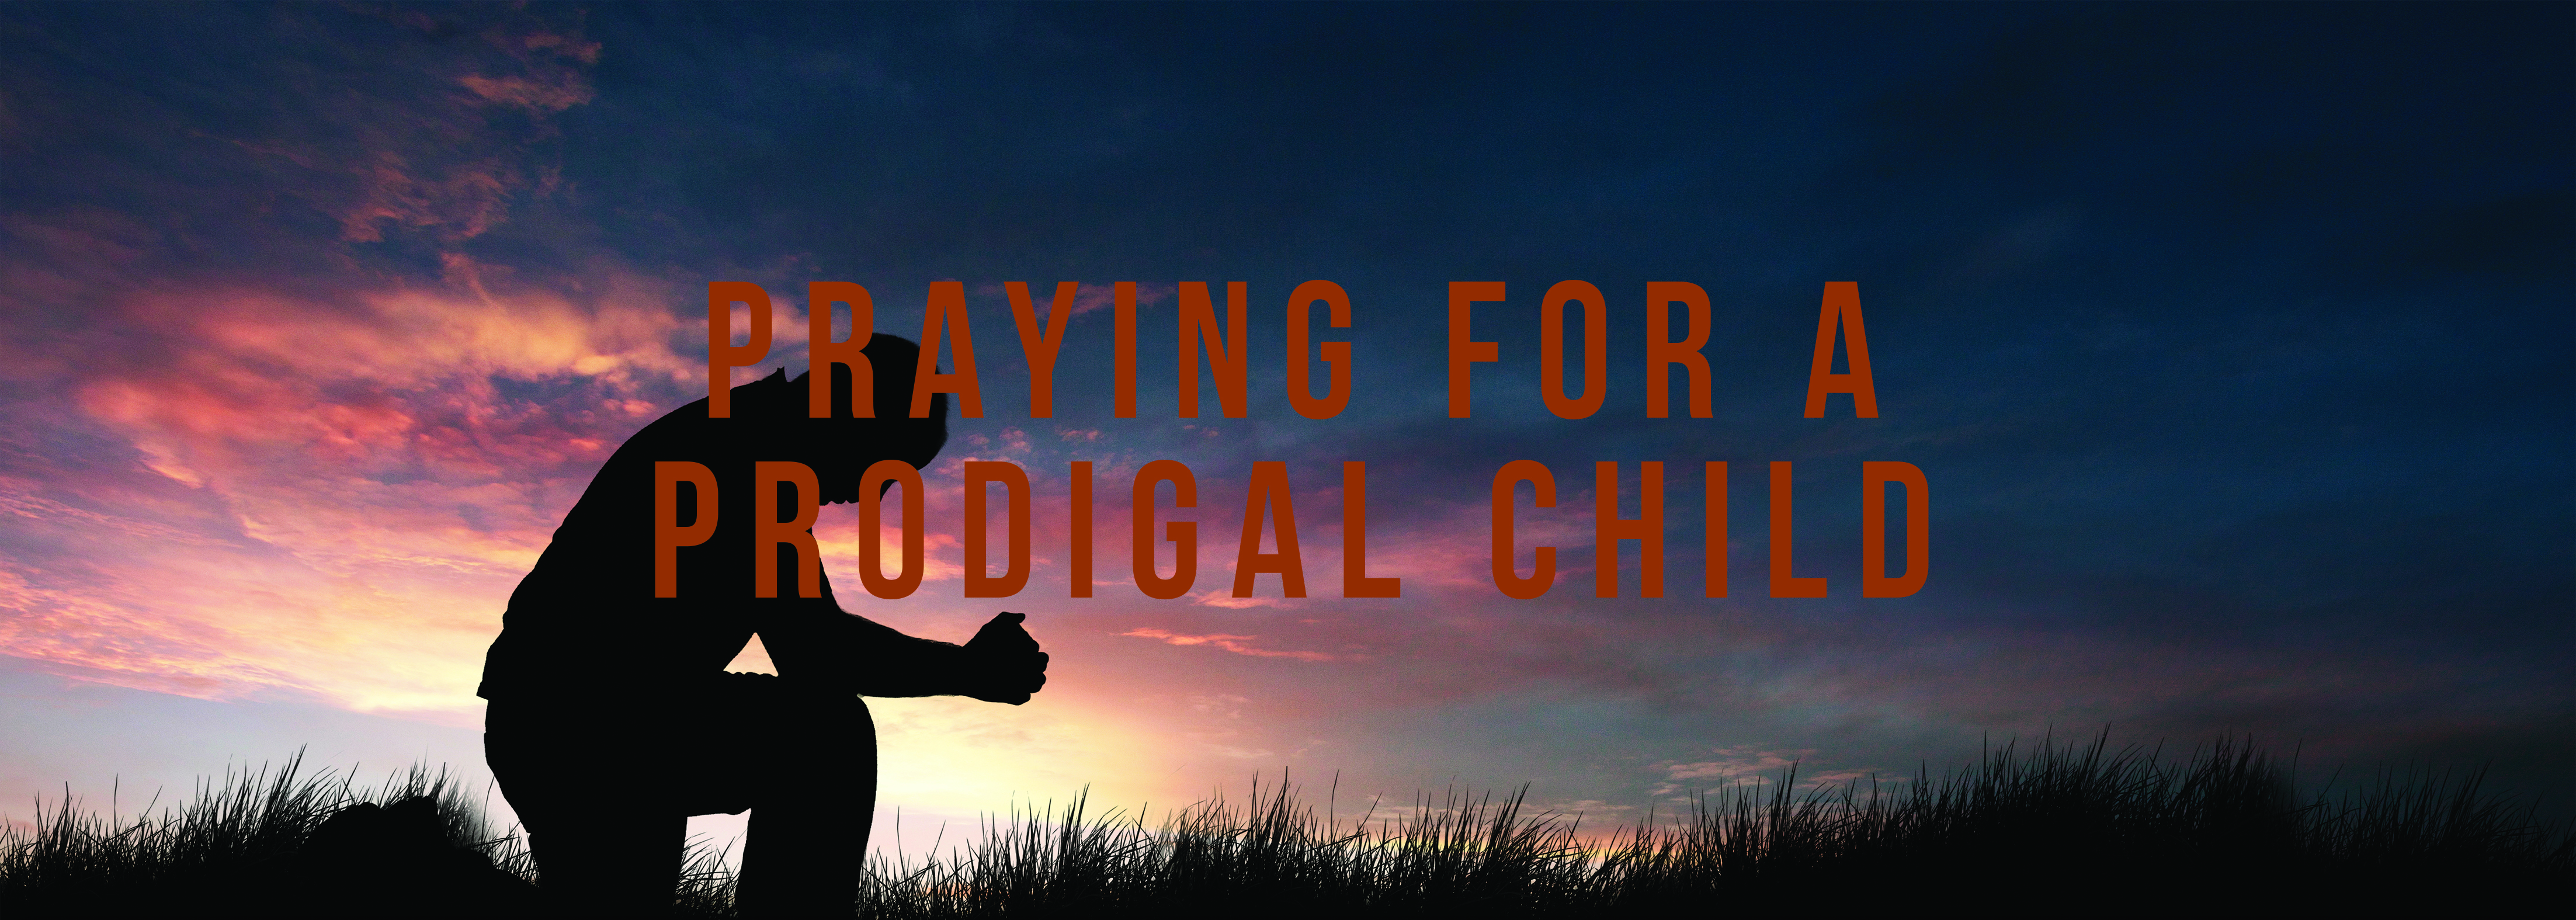 Praying For A Prodigal Child